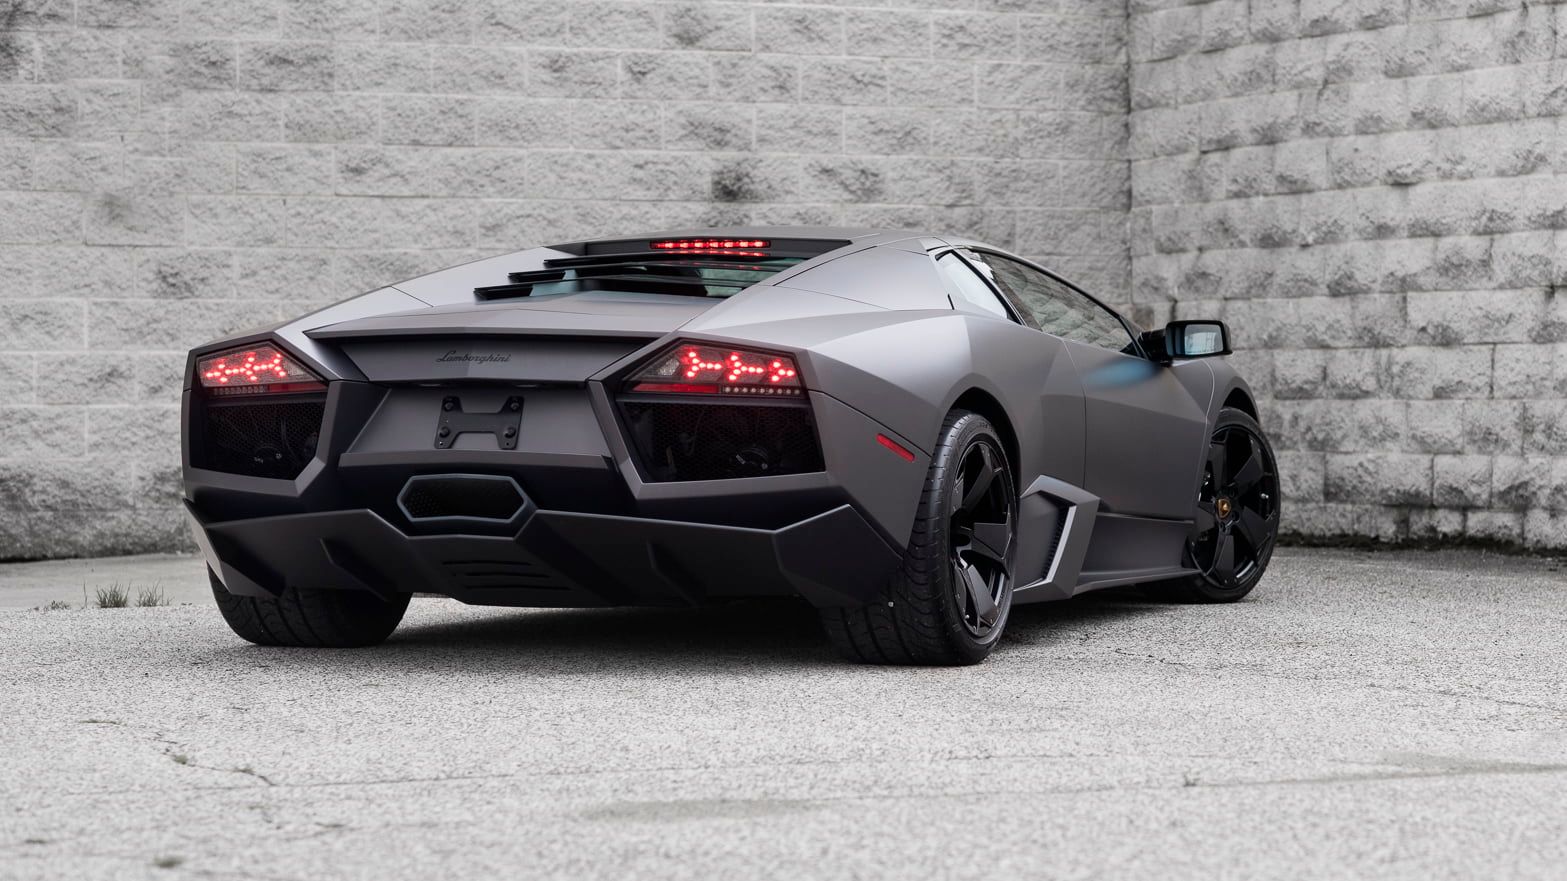 Lamborghini Reventon, silver, rear quarter view, street